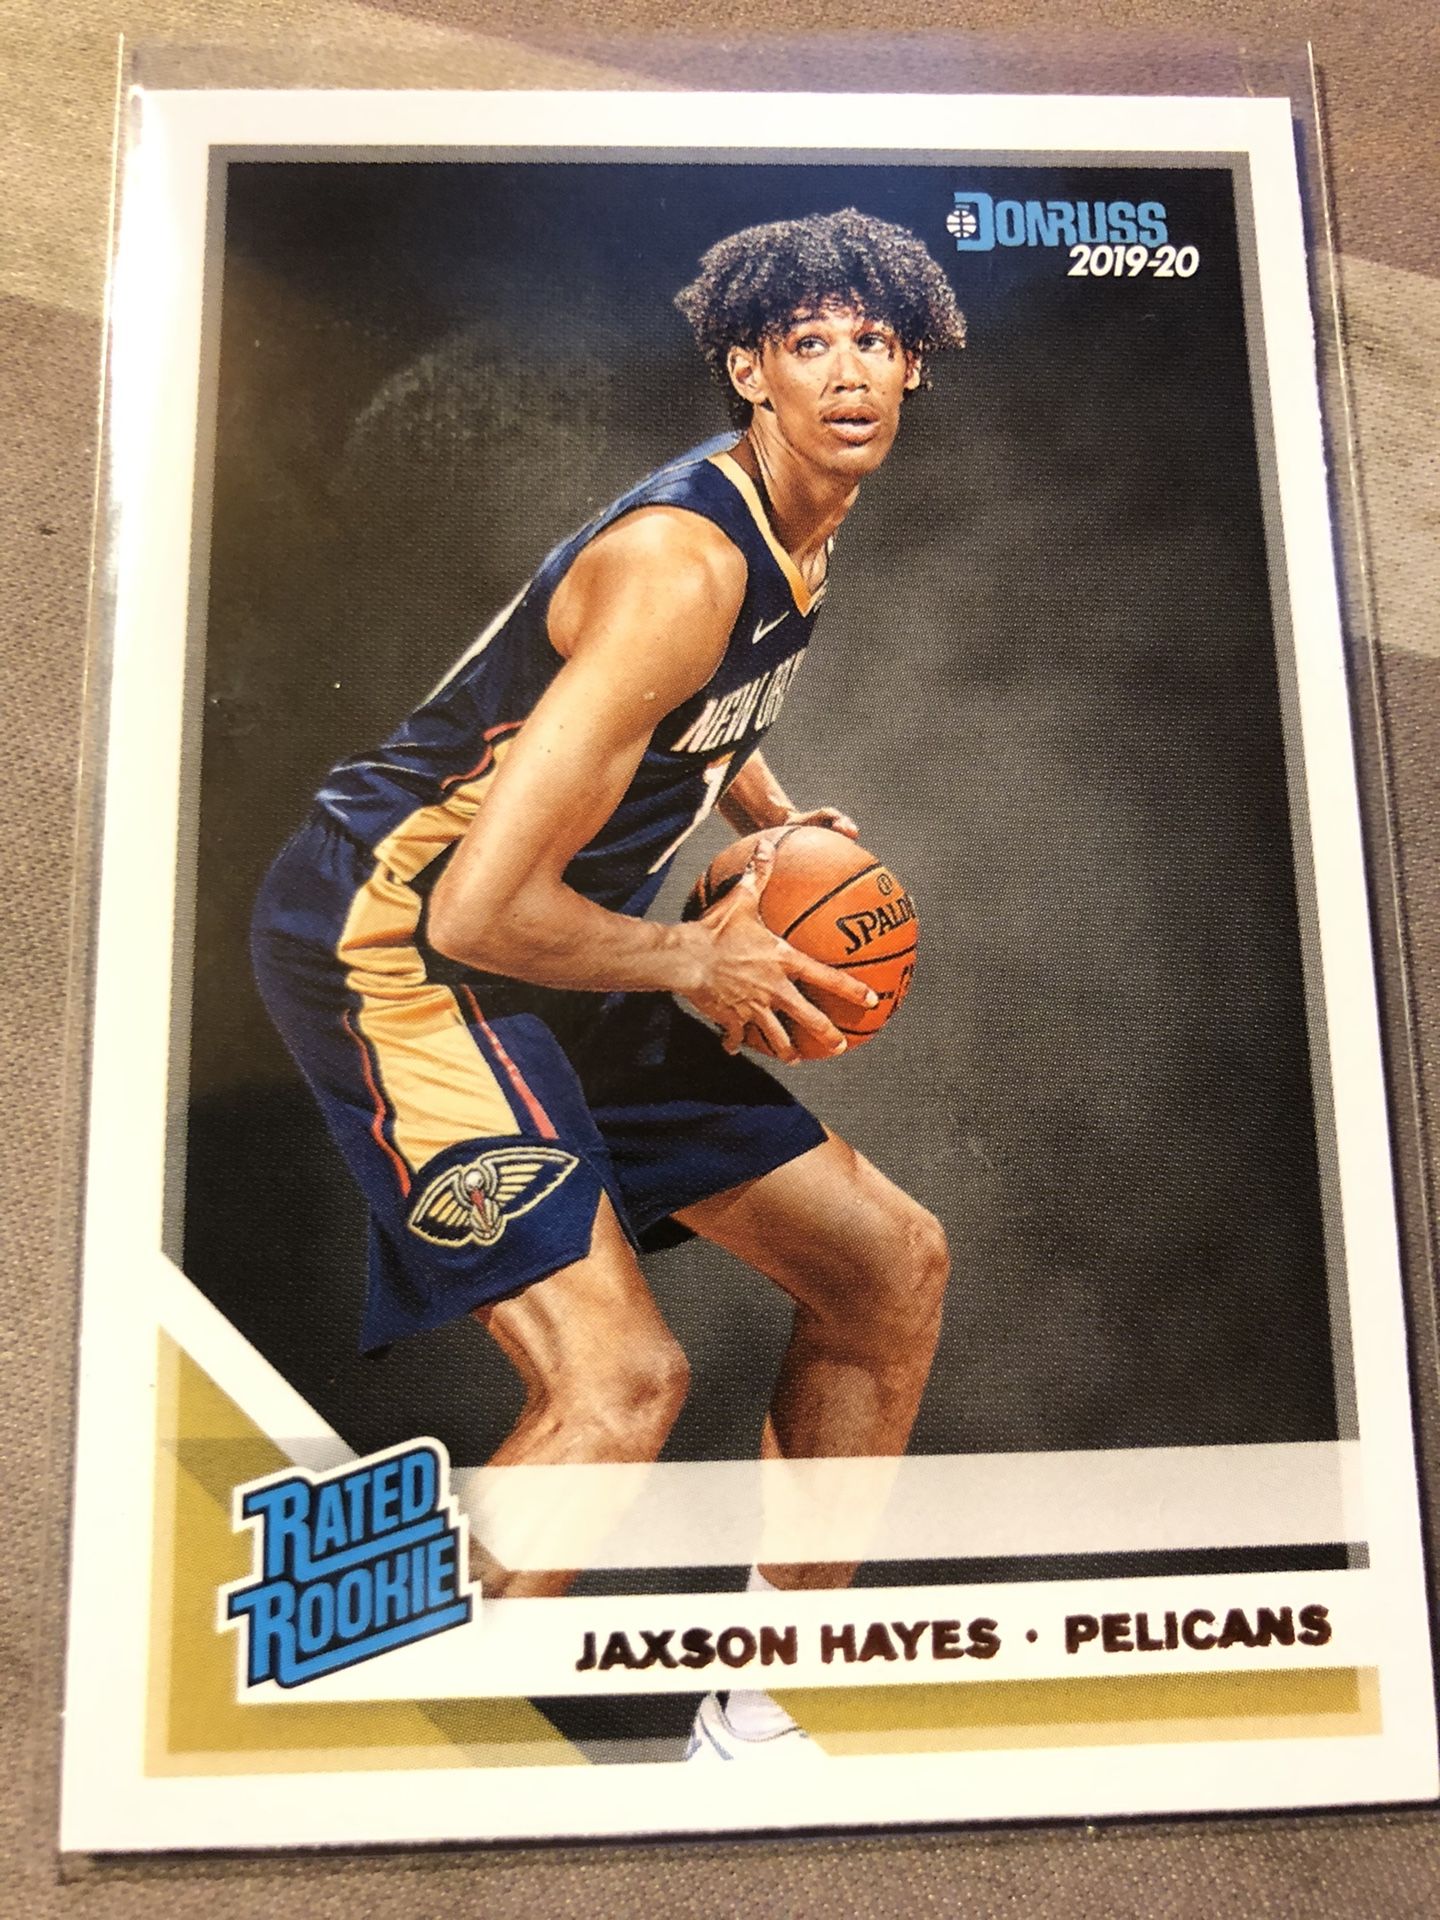 2019-20 Donruss Jaxson Hayes Rated Rookie Card No. 207